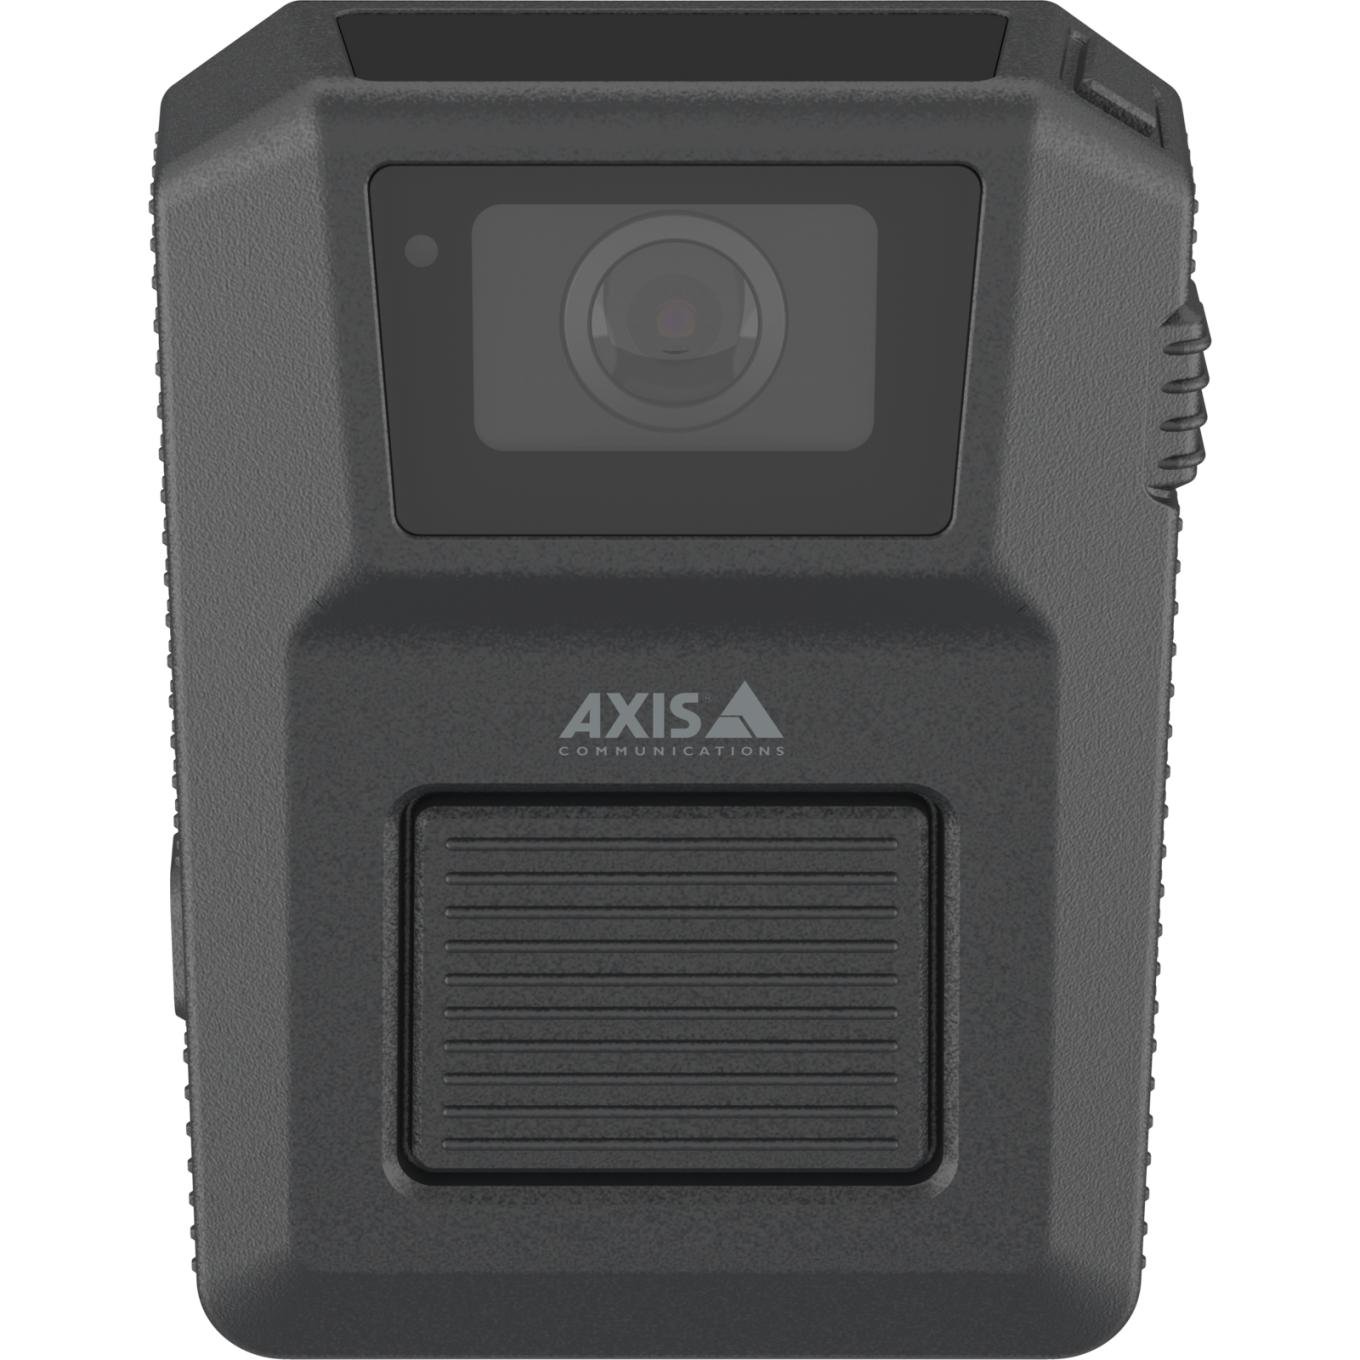 AXIS W102 Body Worn Camera negra, parte delantera